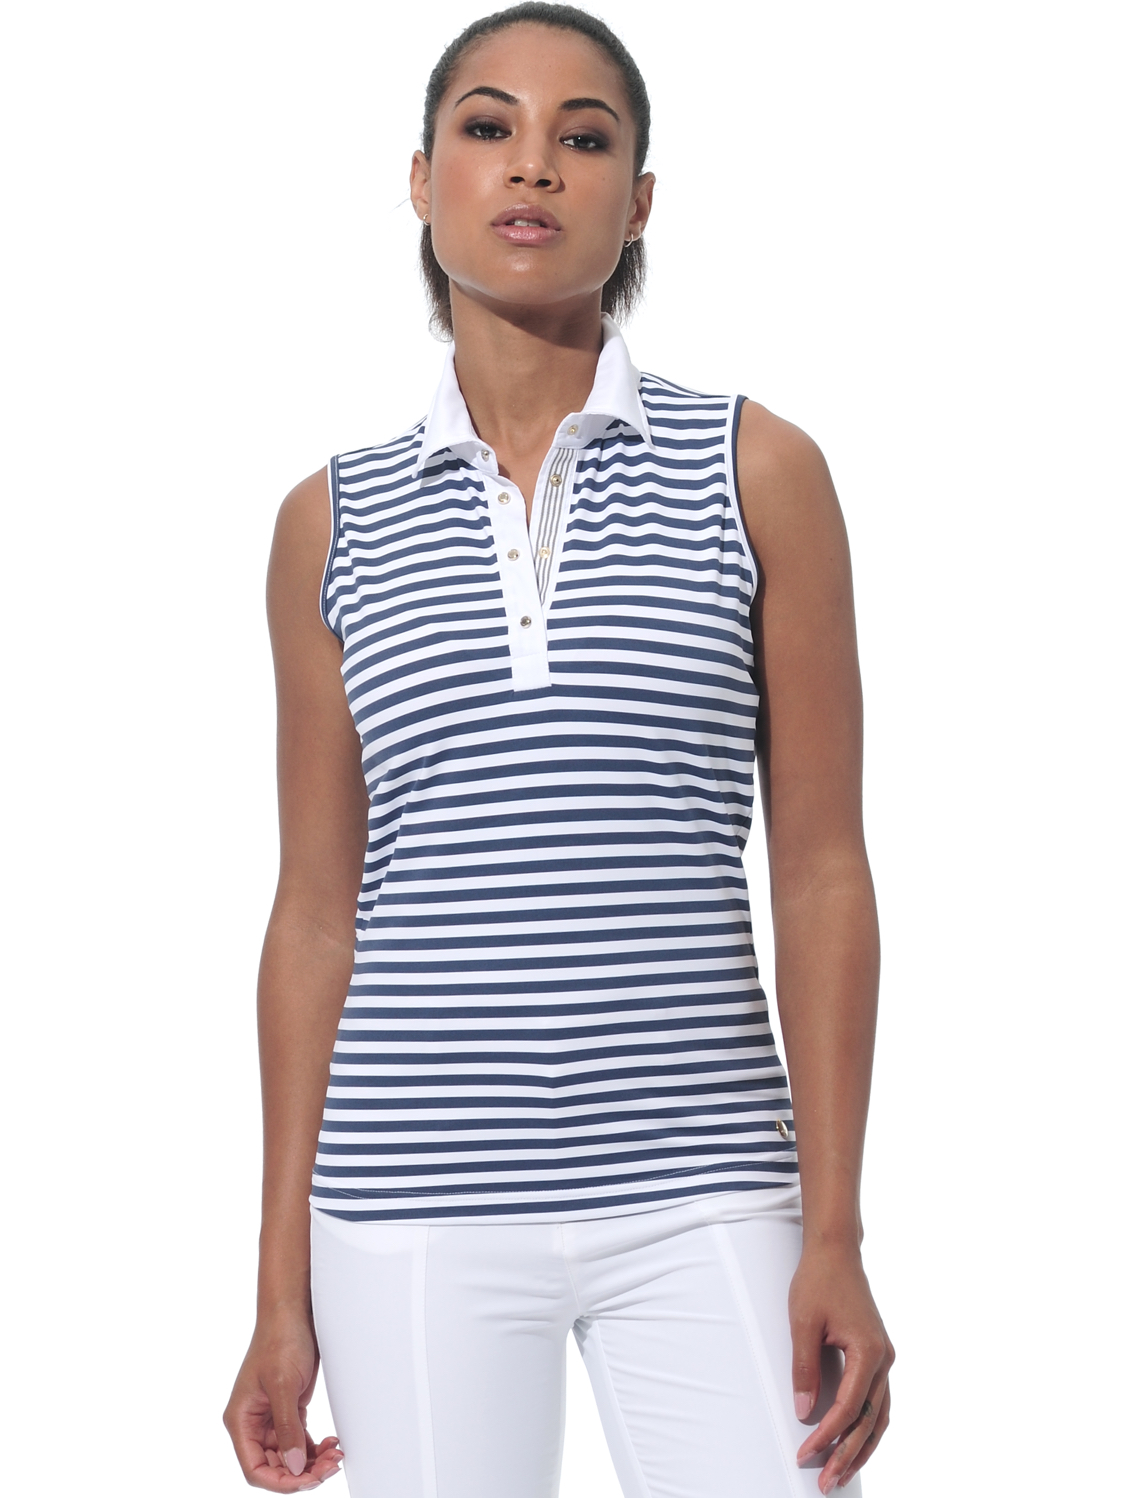 Striped print polo shirt navy 